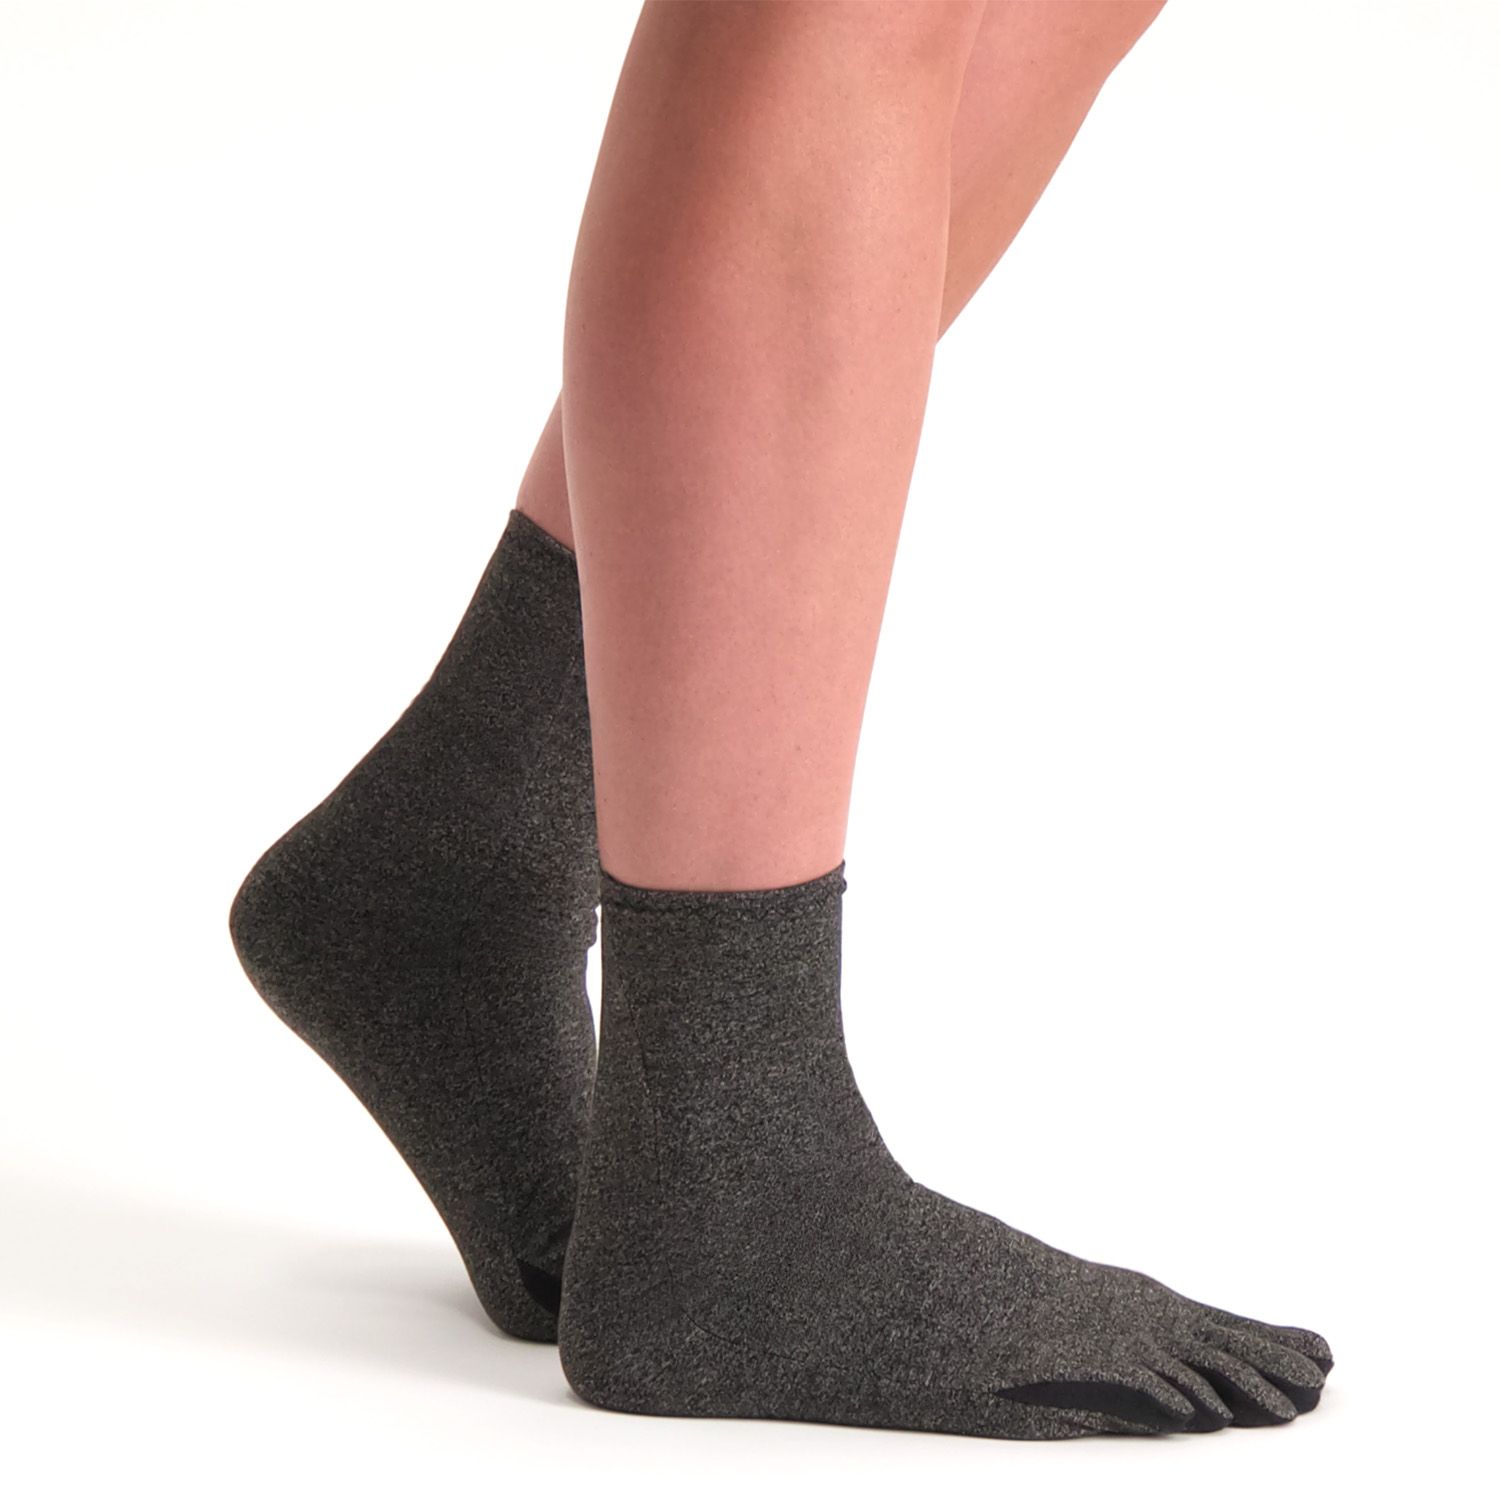 medidu rheumatoid arthritis osteoarthritis socks worn while standing